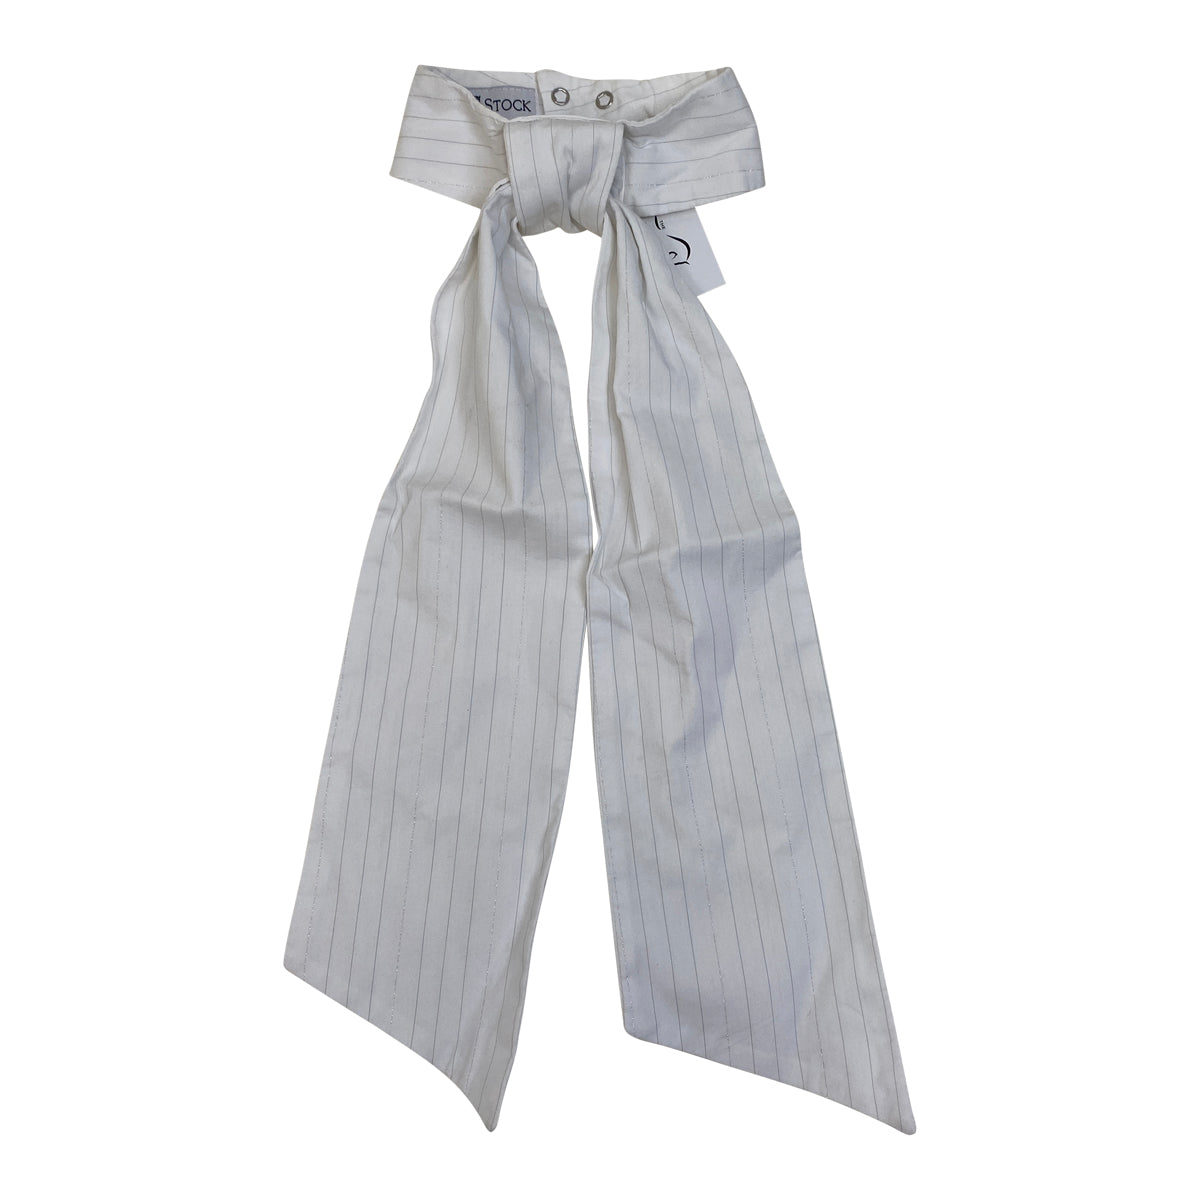 Style Stock Pre-Tied Stock Tie in White/Silver Thread